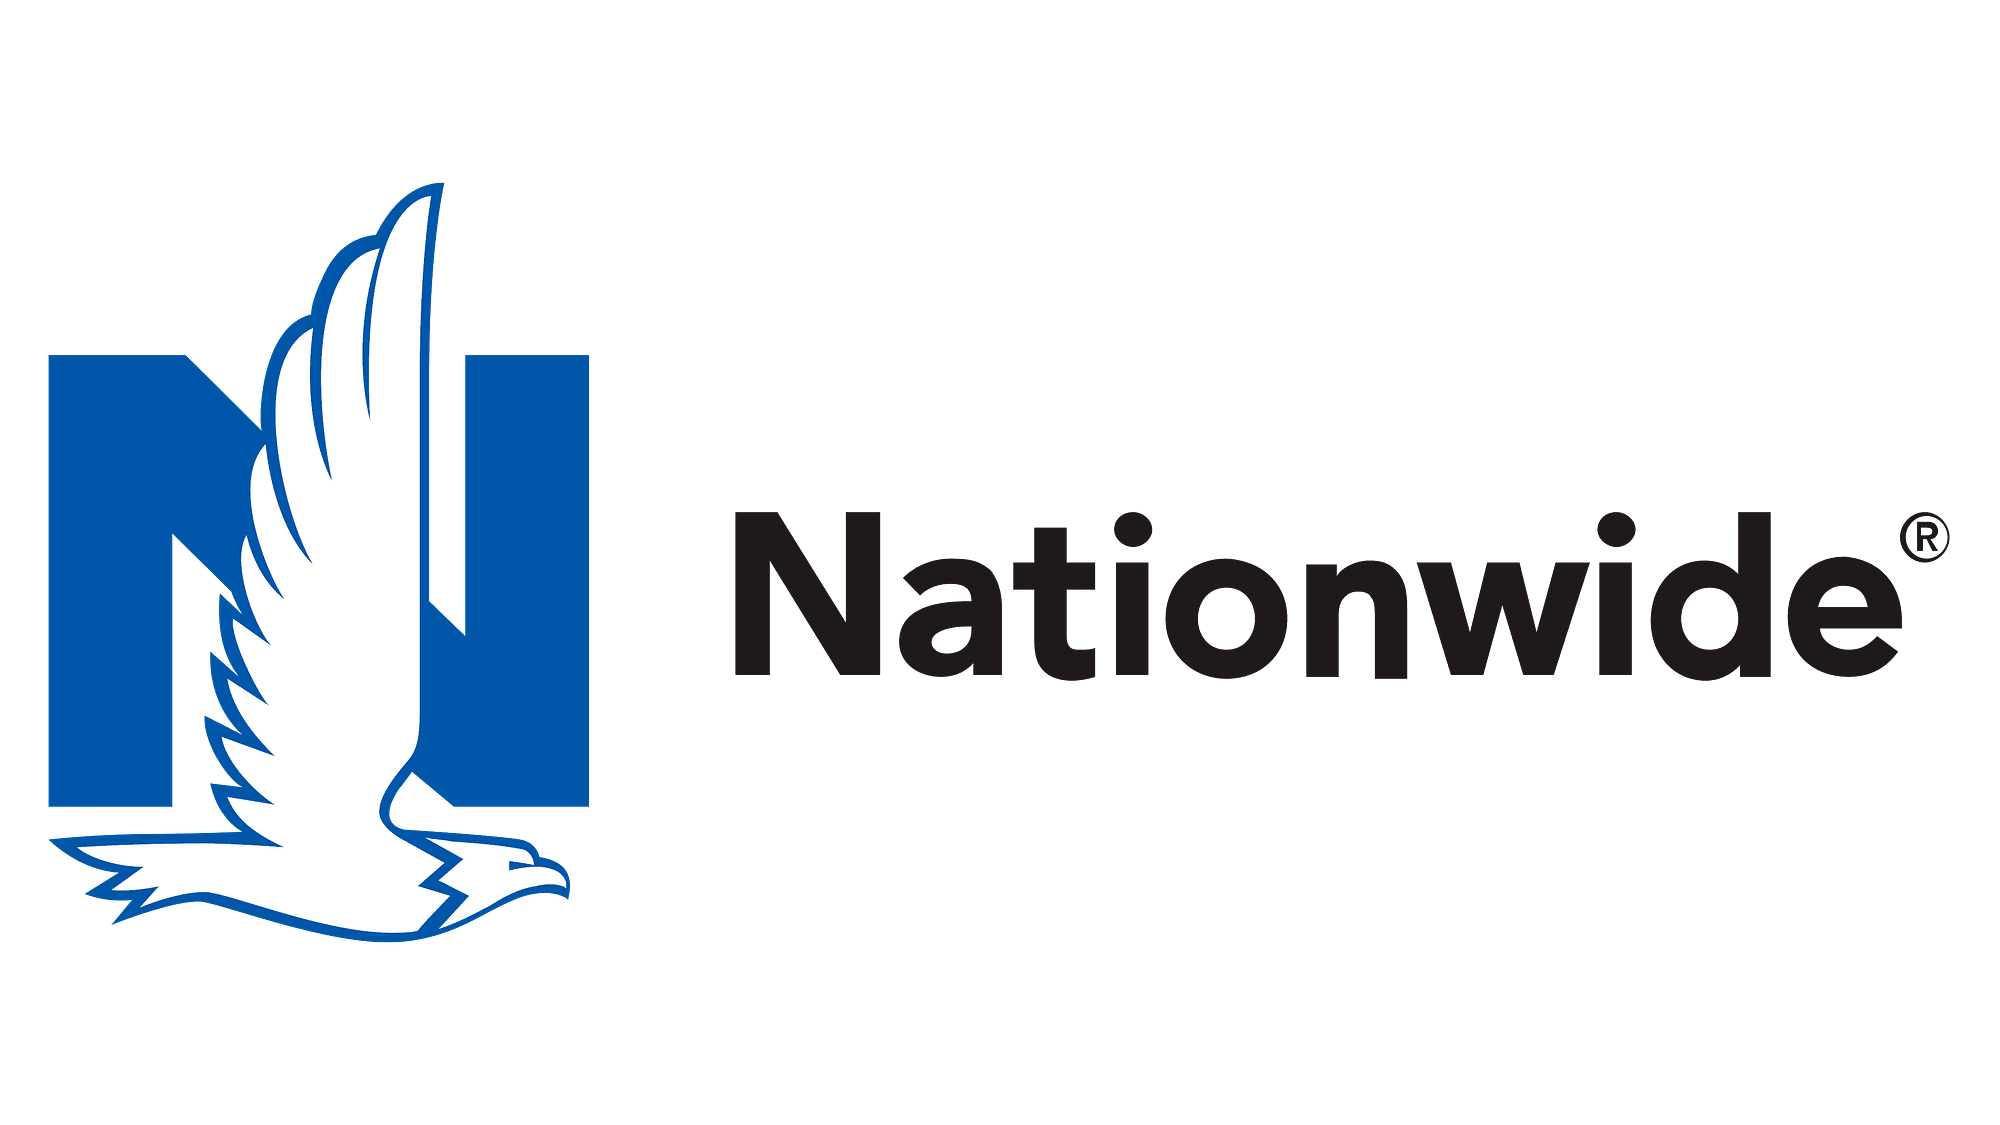 Nationwide horizontal logo